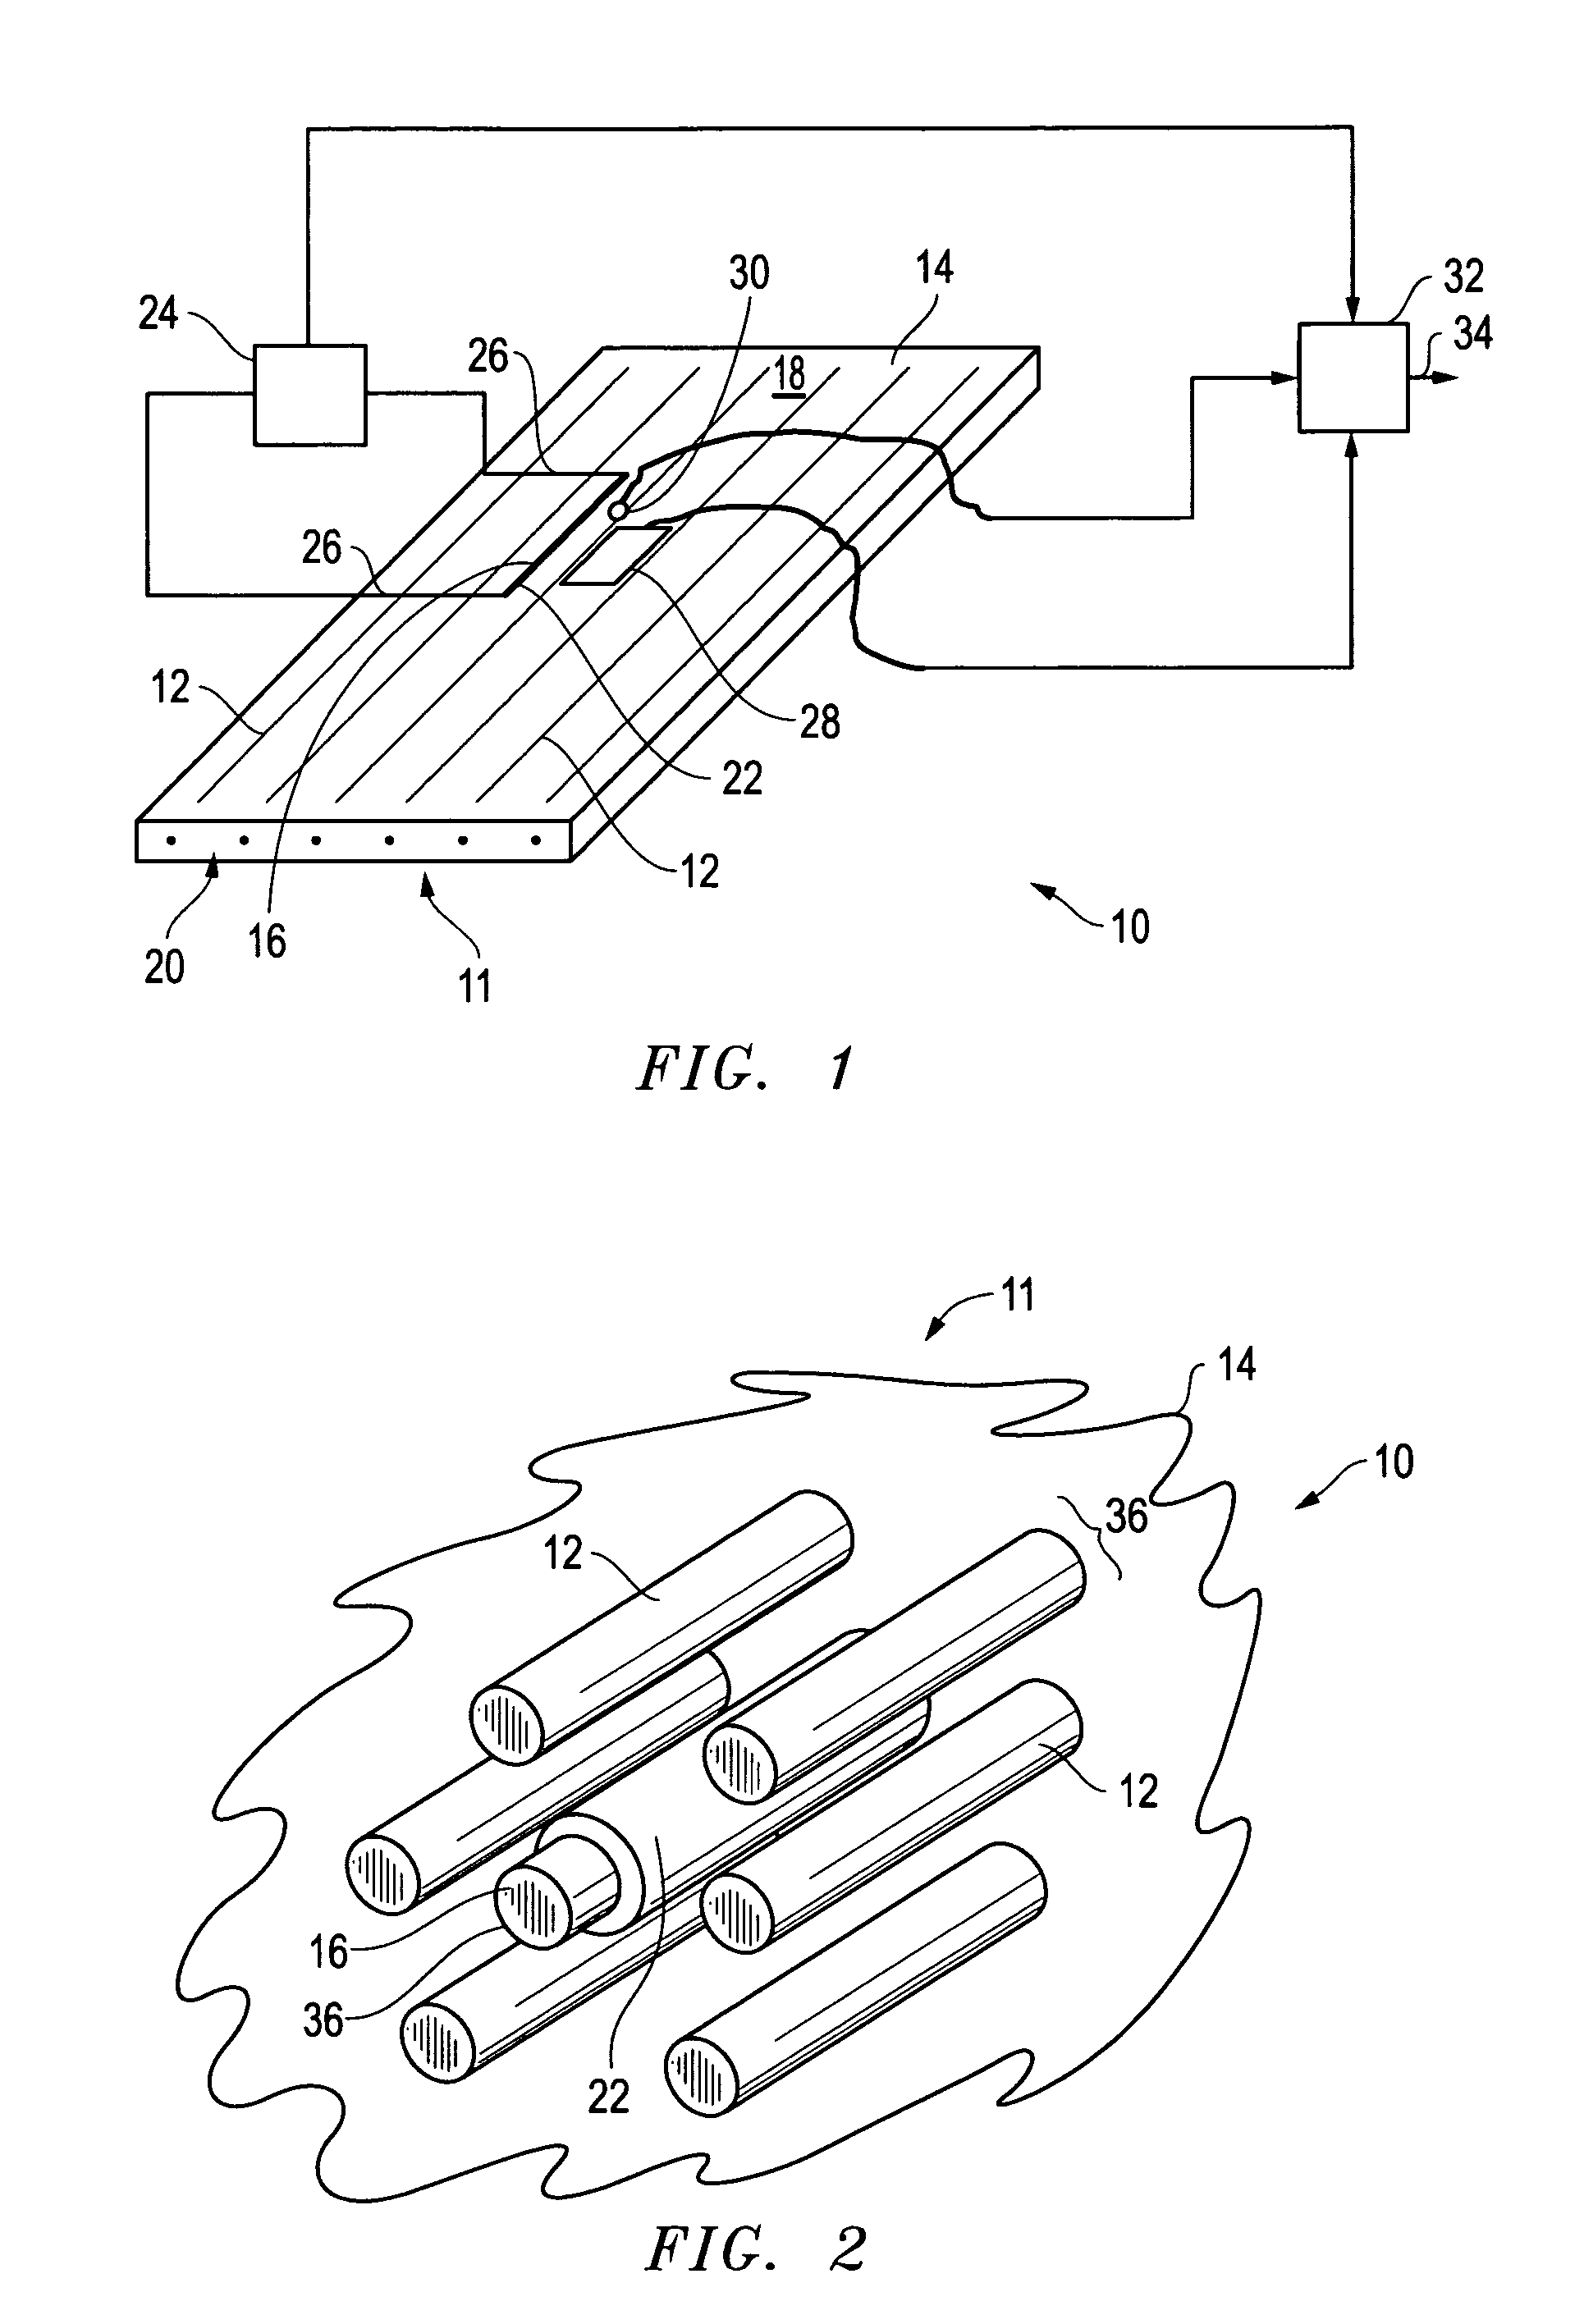 Insulated fiber sensor apparatus and method